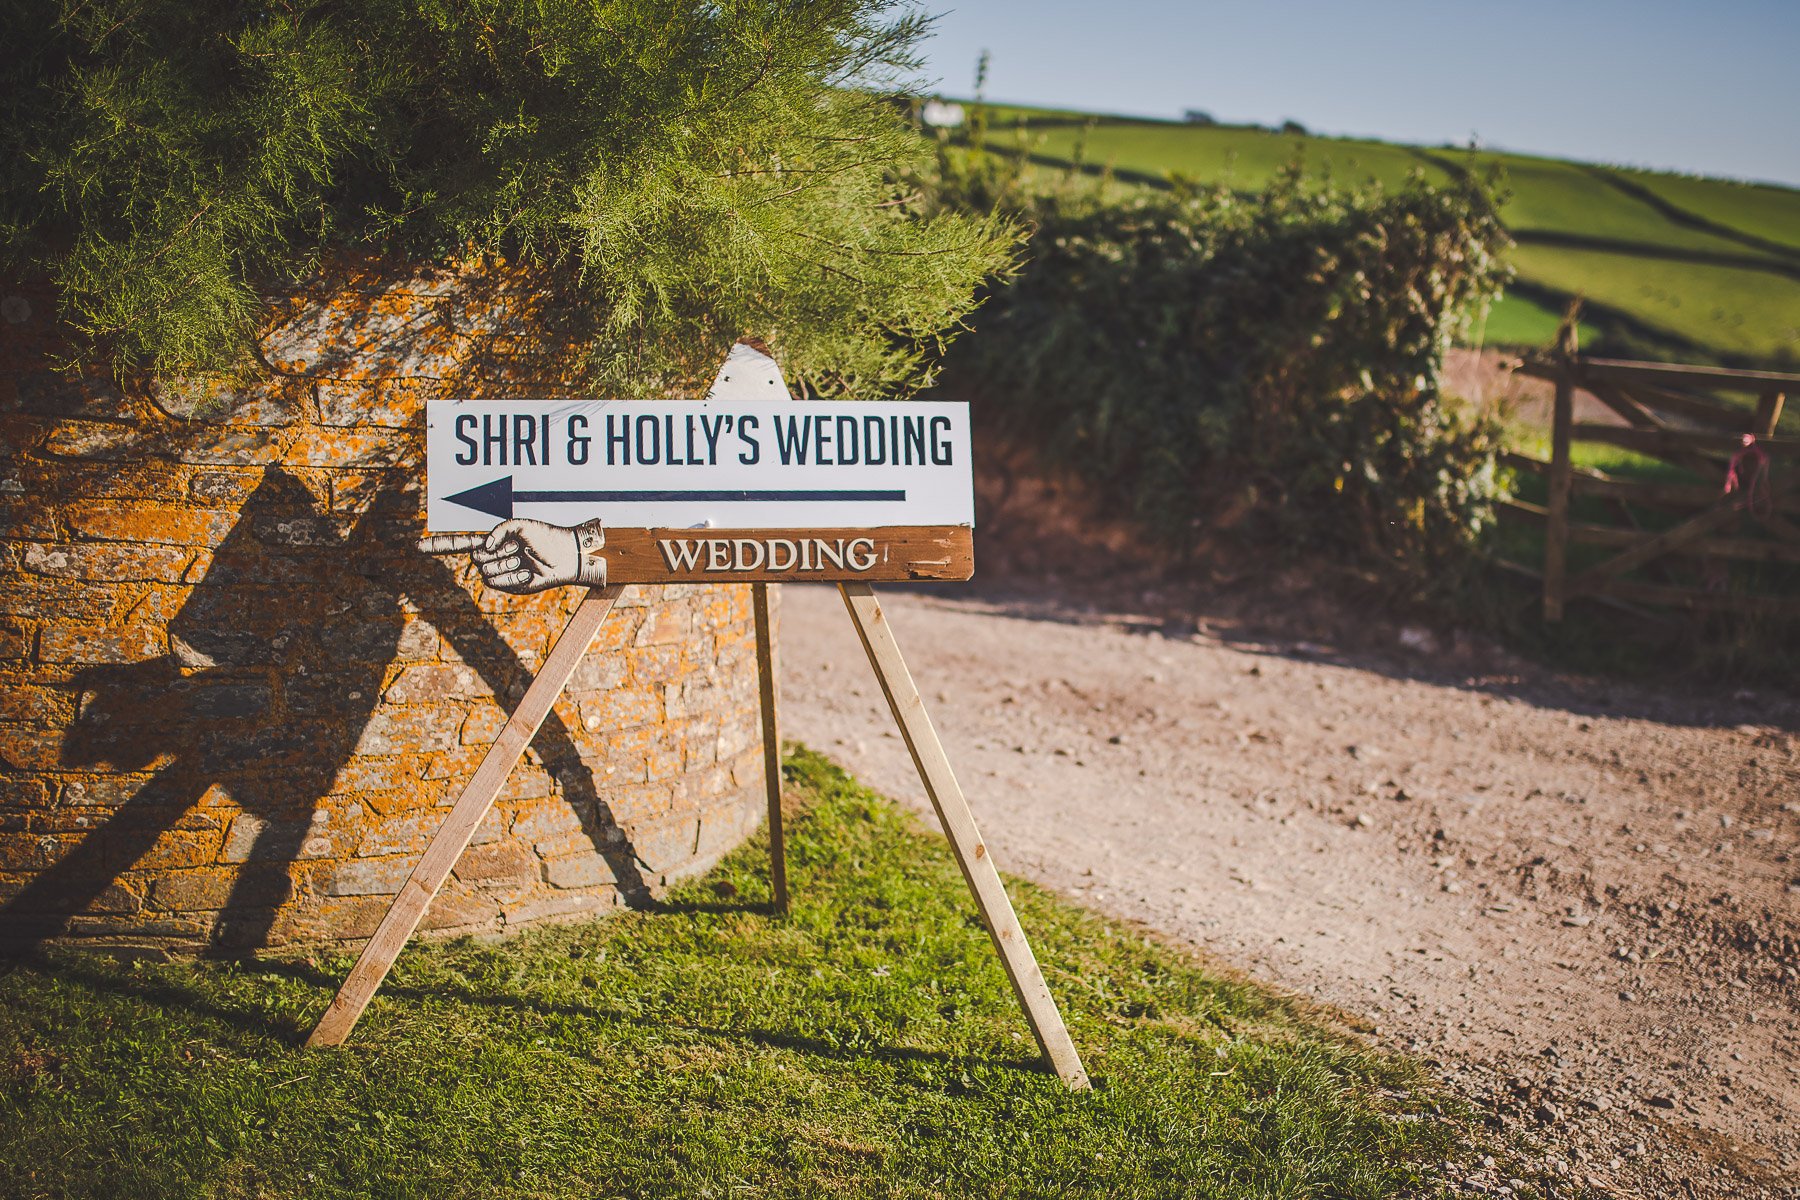 10 The Barn at South Milton - Devon Wedding Photography.jpg